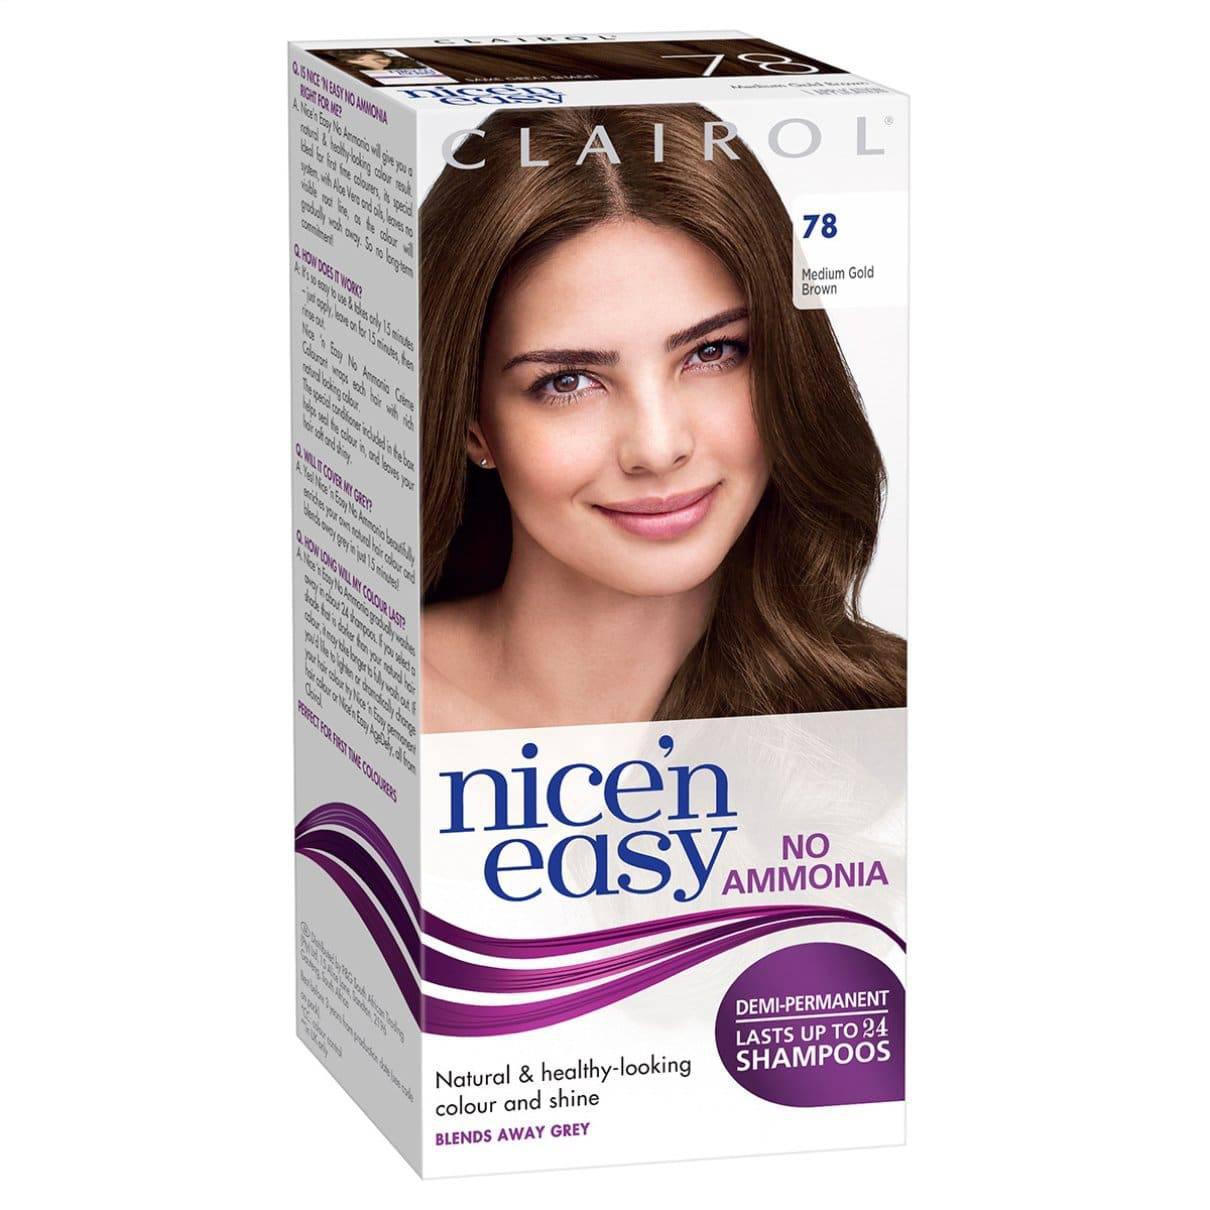 Clairol Nice N Easy No Ammonia Semi-Permanent Hair Dye - 78 Medium Golden Brown - Healthxpress.ie